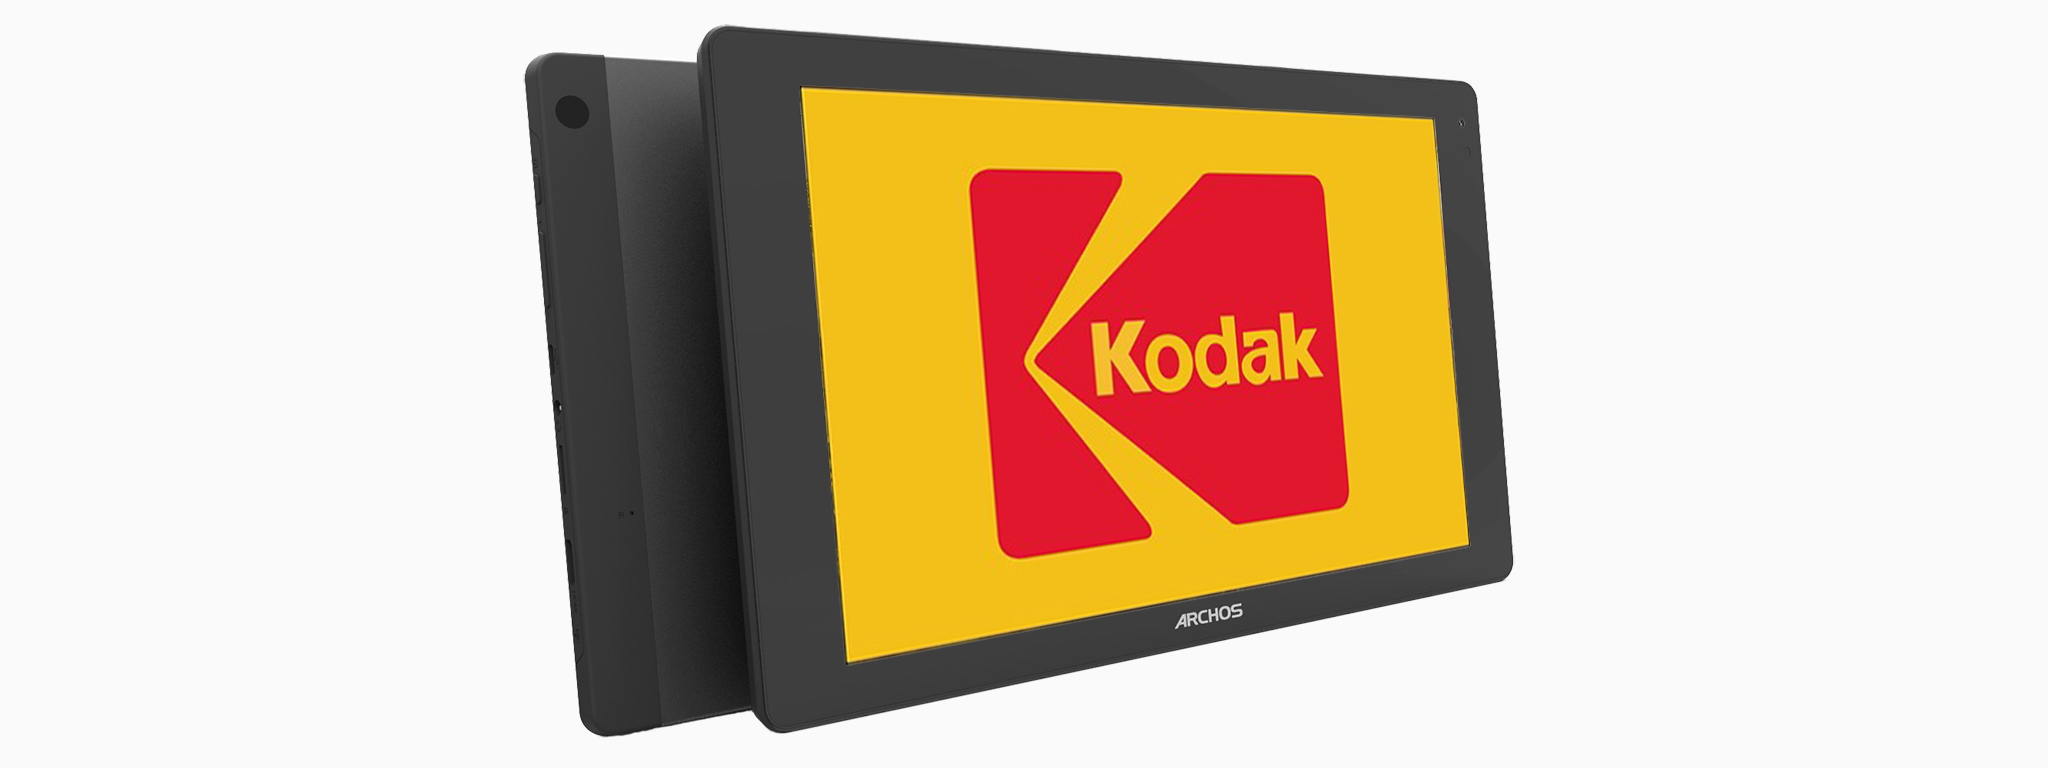 Máy tính bảng Kodak sẽ do Archos sản xuất